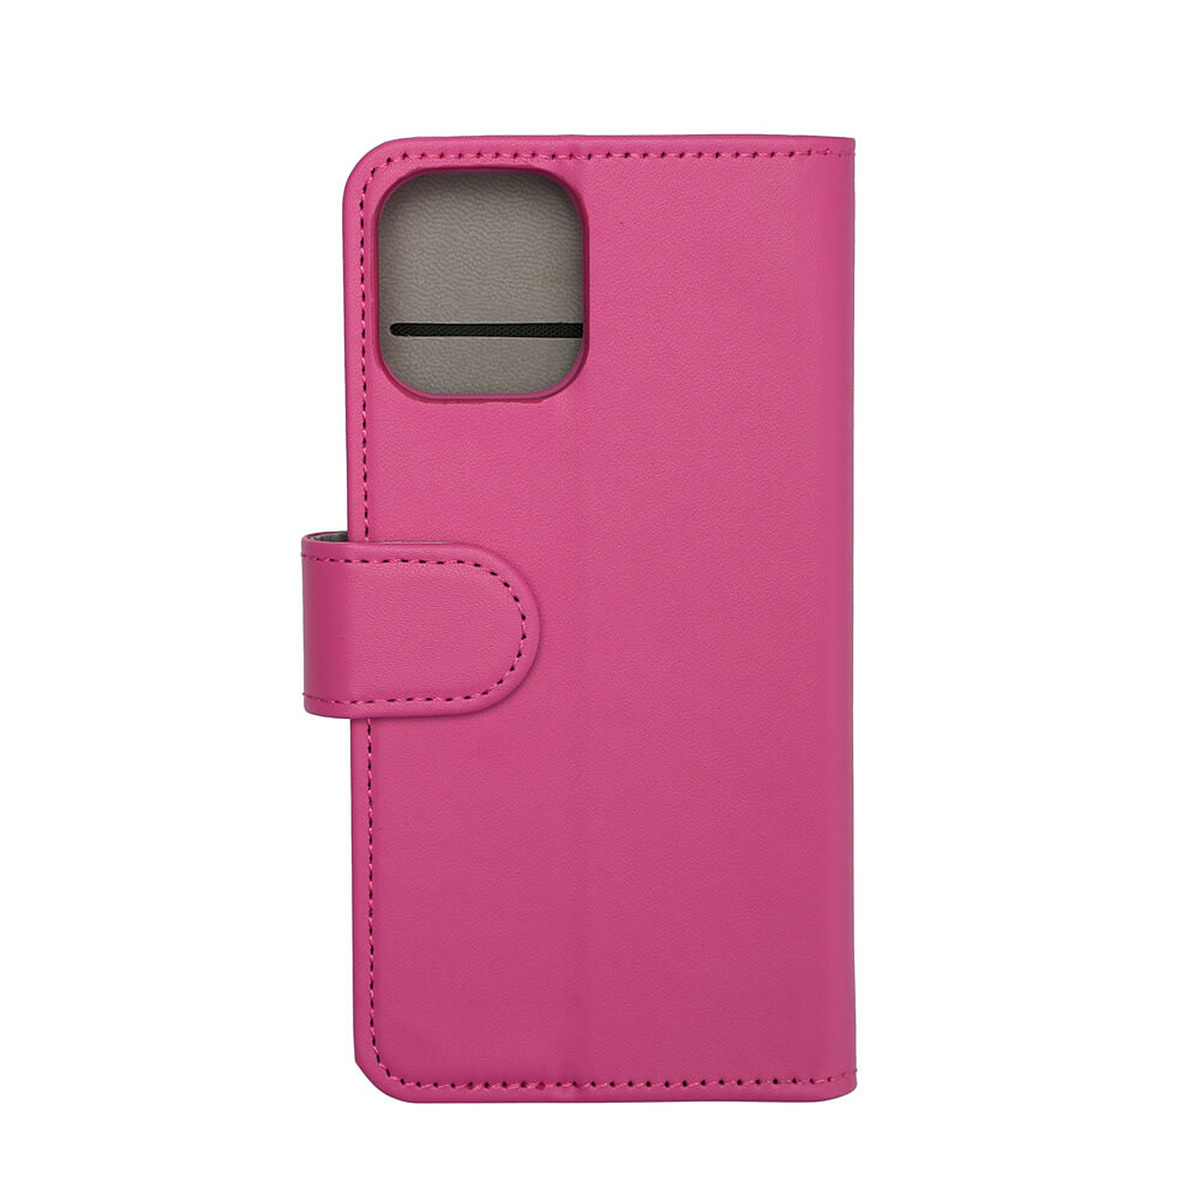 Gear plånboksväska, iPhone 11 Pro, rosa